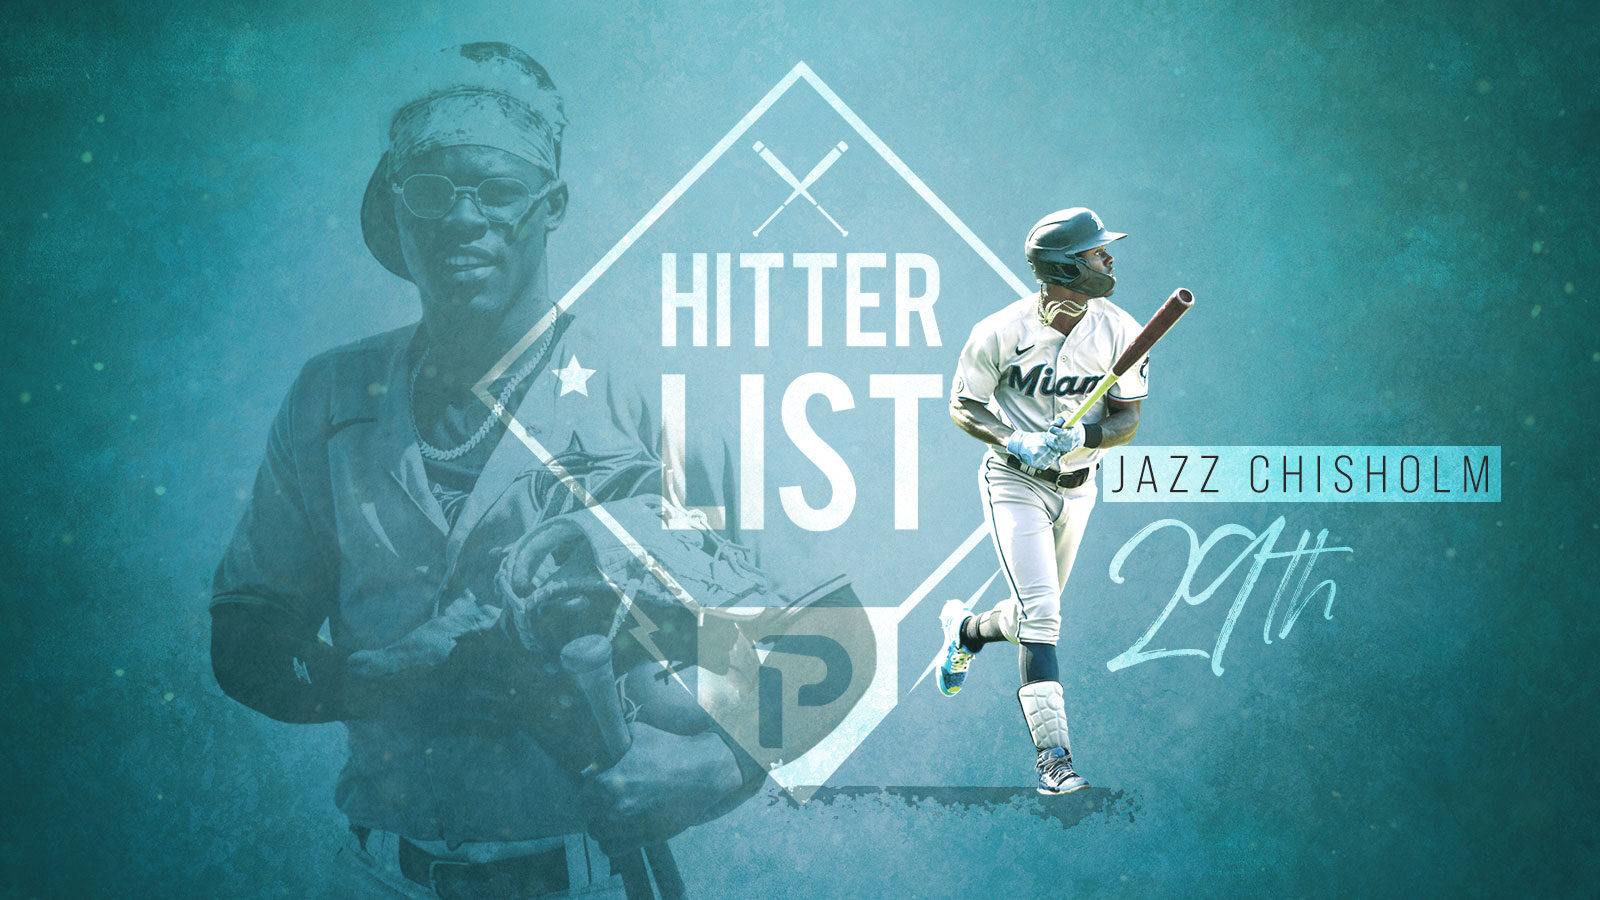 2023 Fantasy Baseball Breakout Hitter: Jazz Chisholm Has The